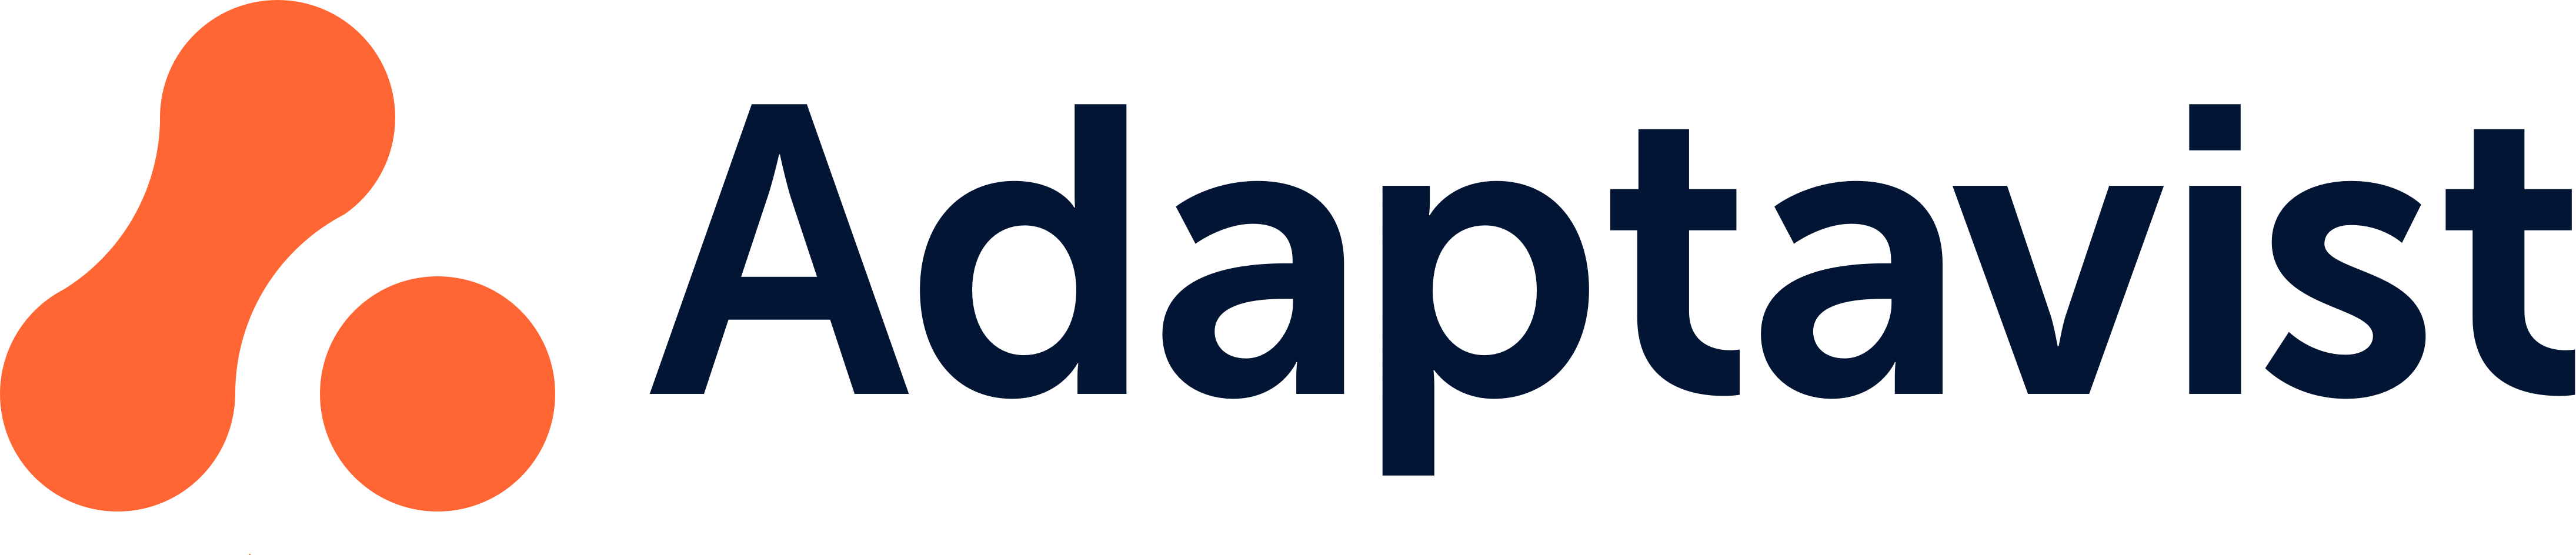 Adaptavist-logo.png